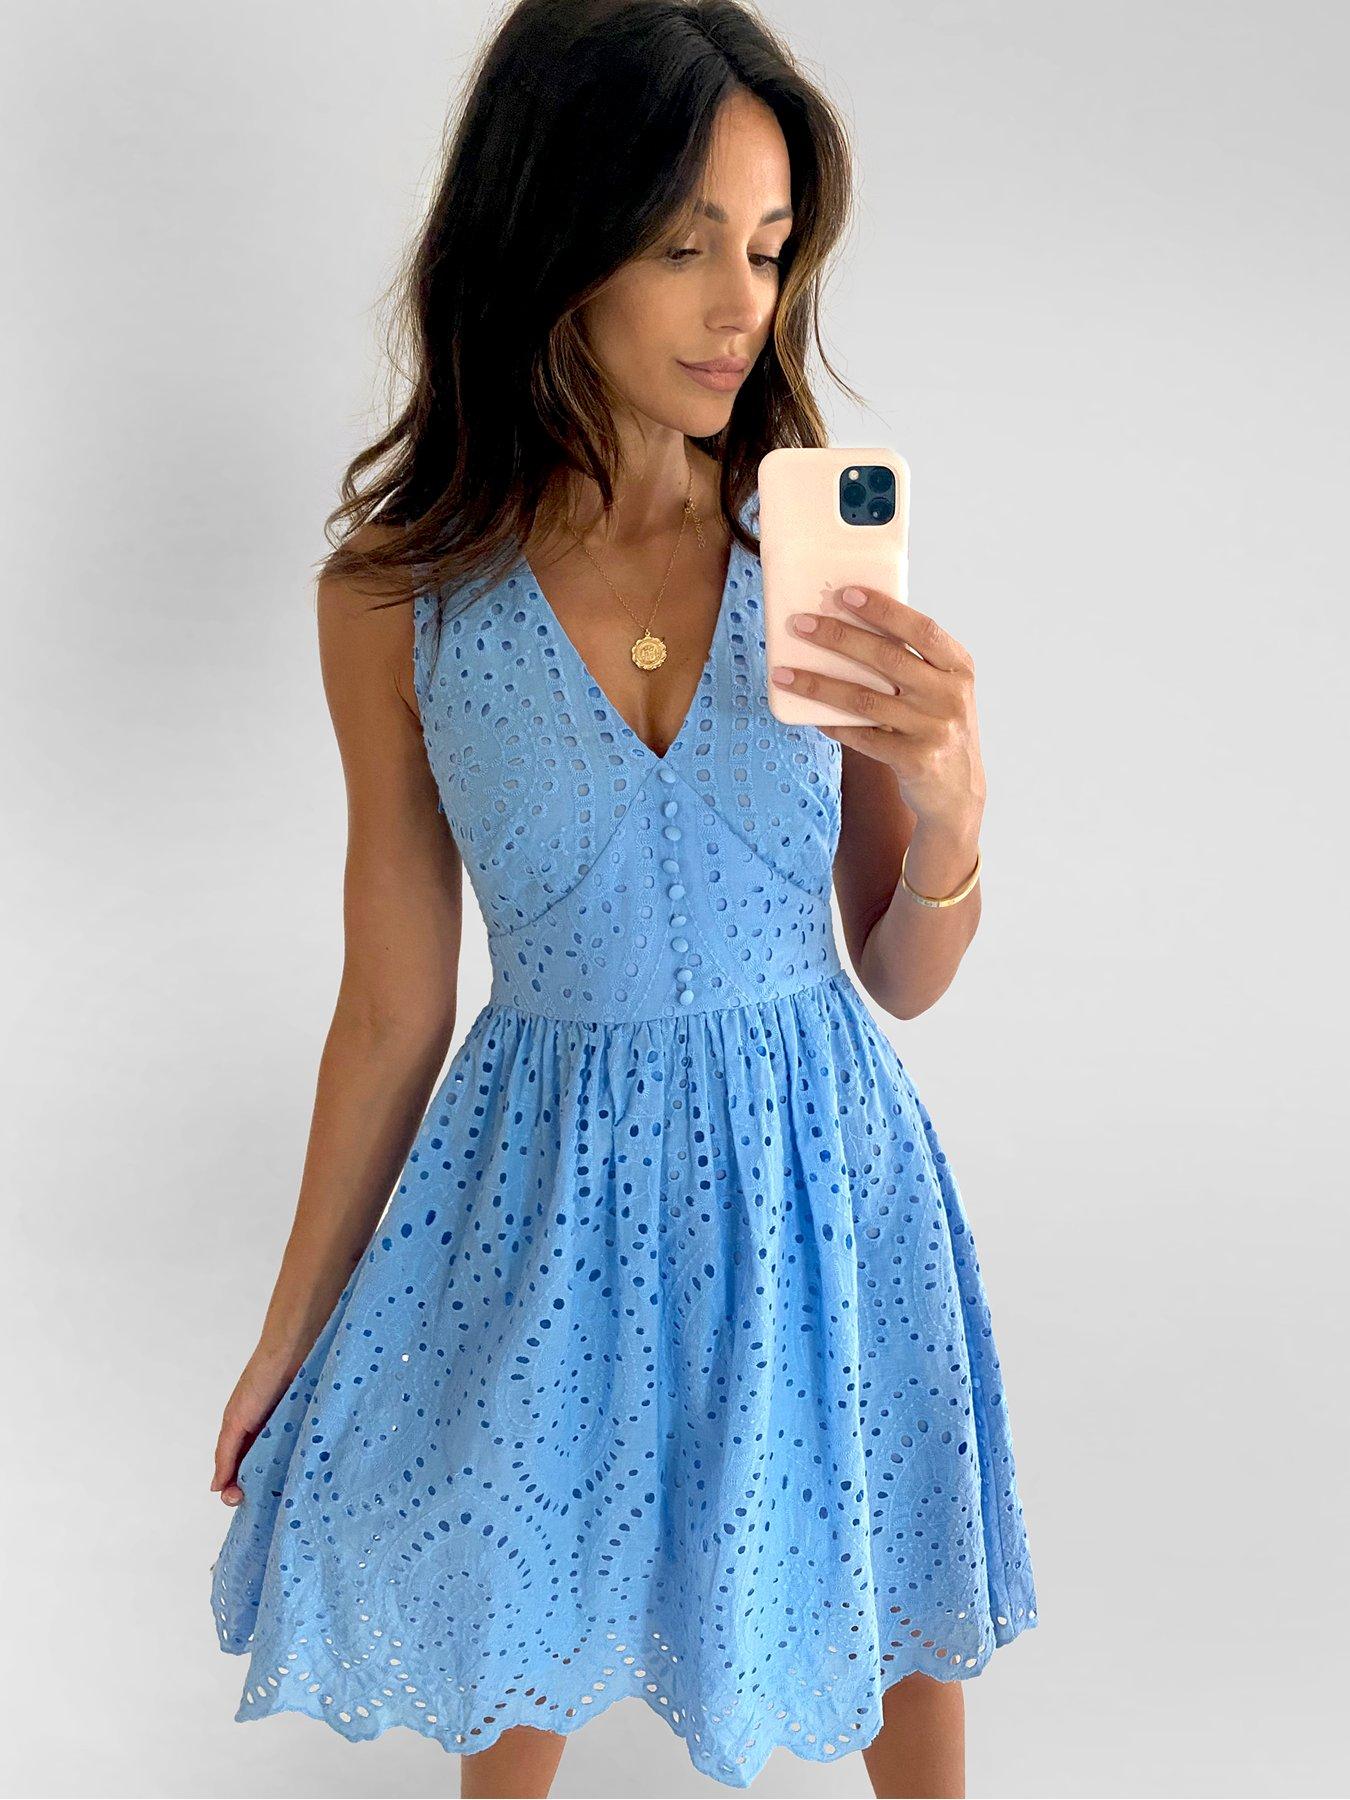 michelle keegan blue dress